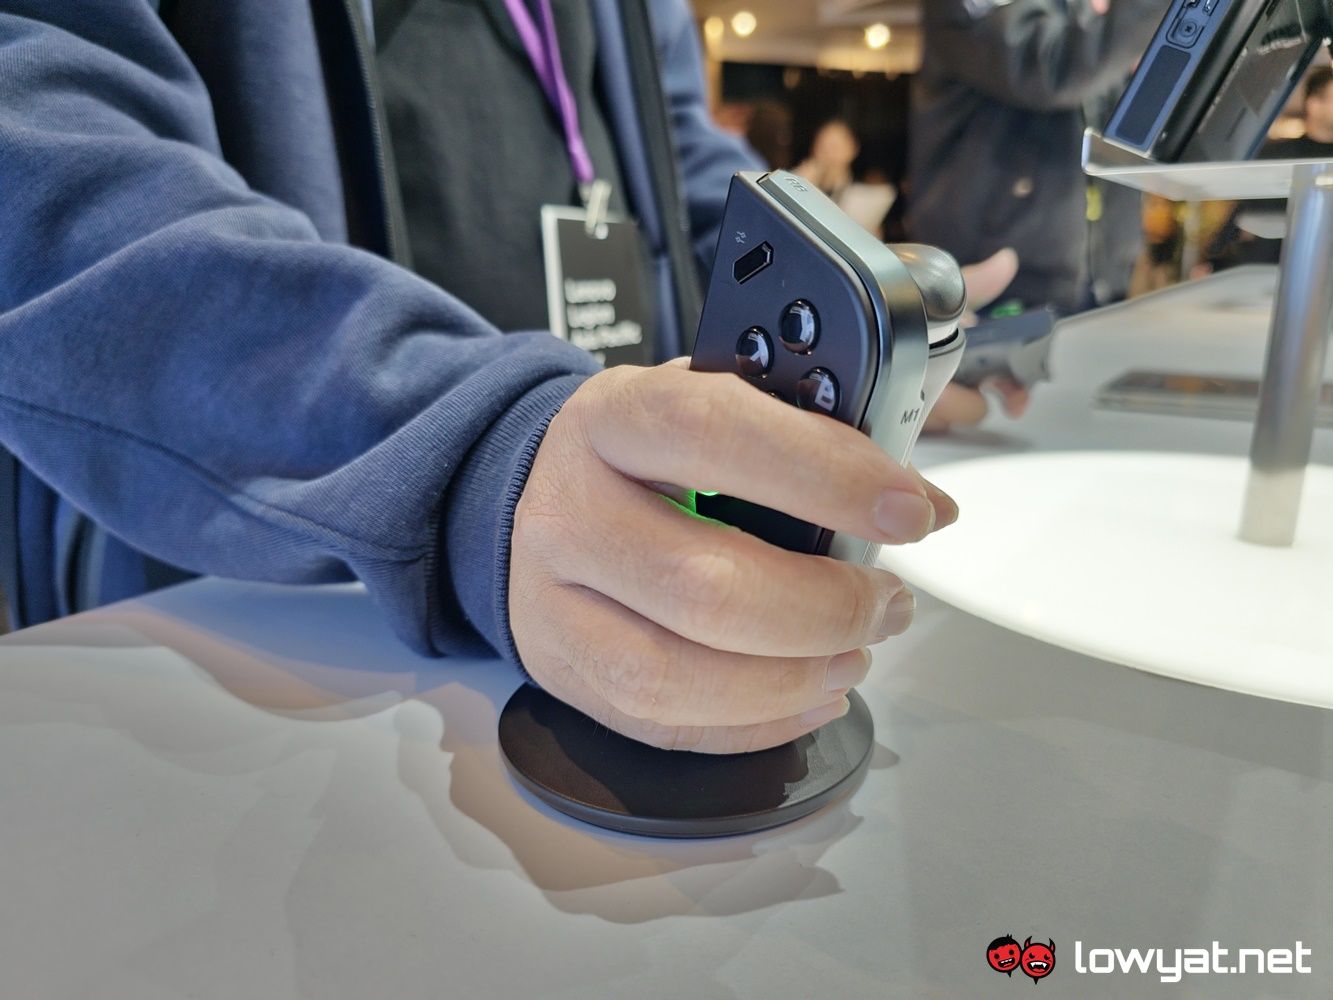 Lenovo Legion Go Hands On: The PC Handheld With Plenty Of Attitude